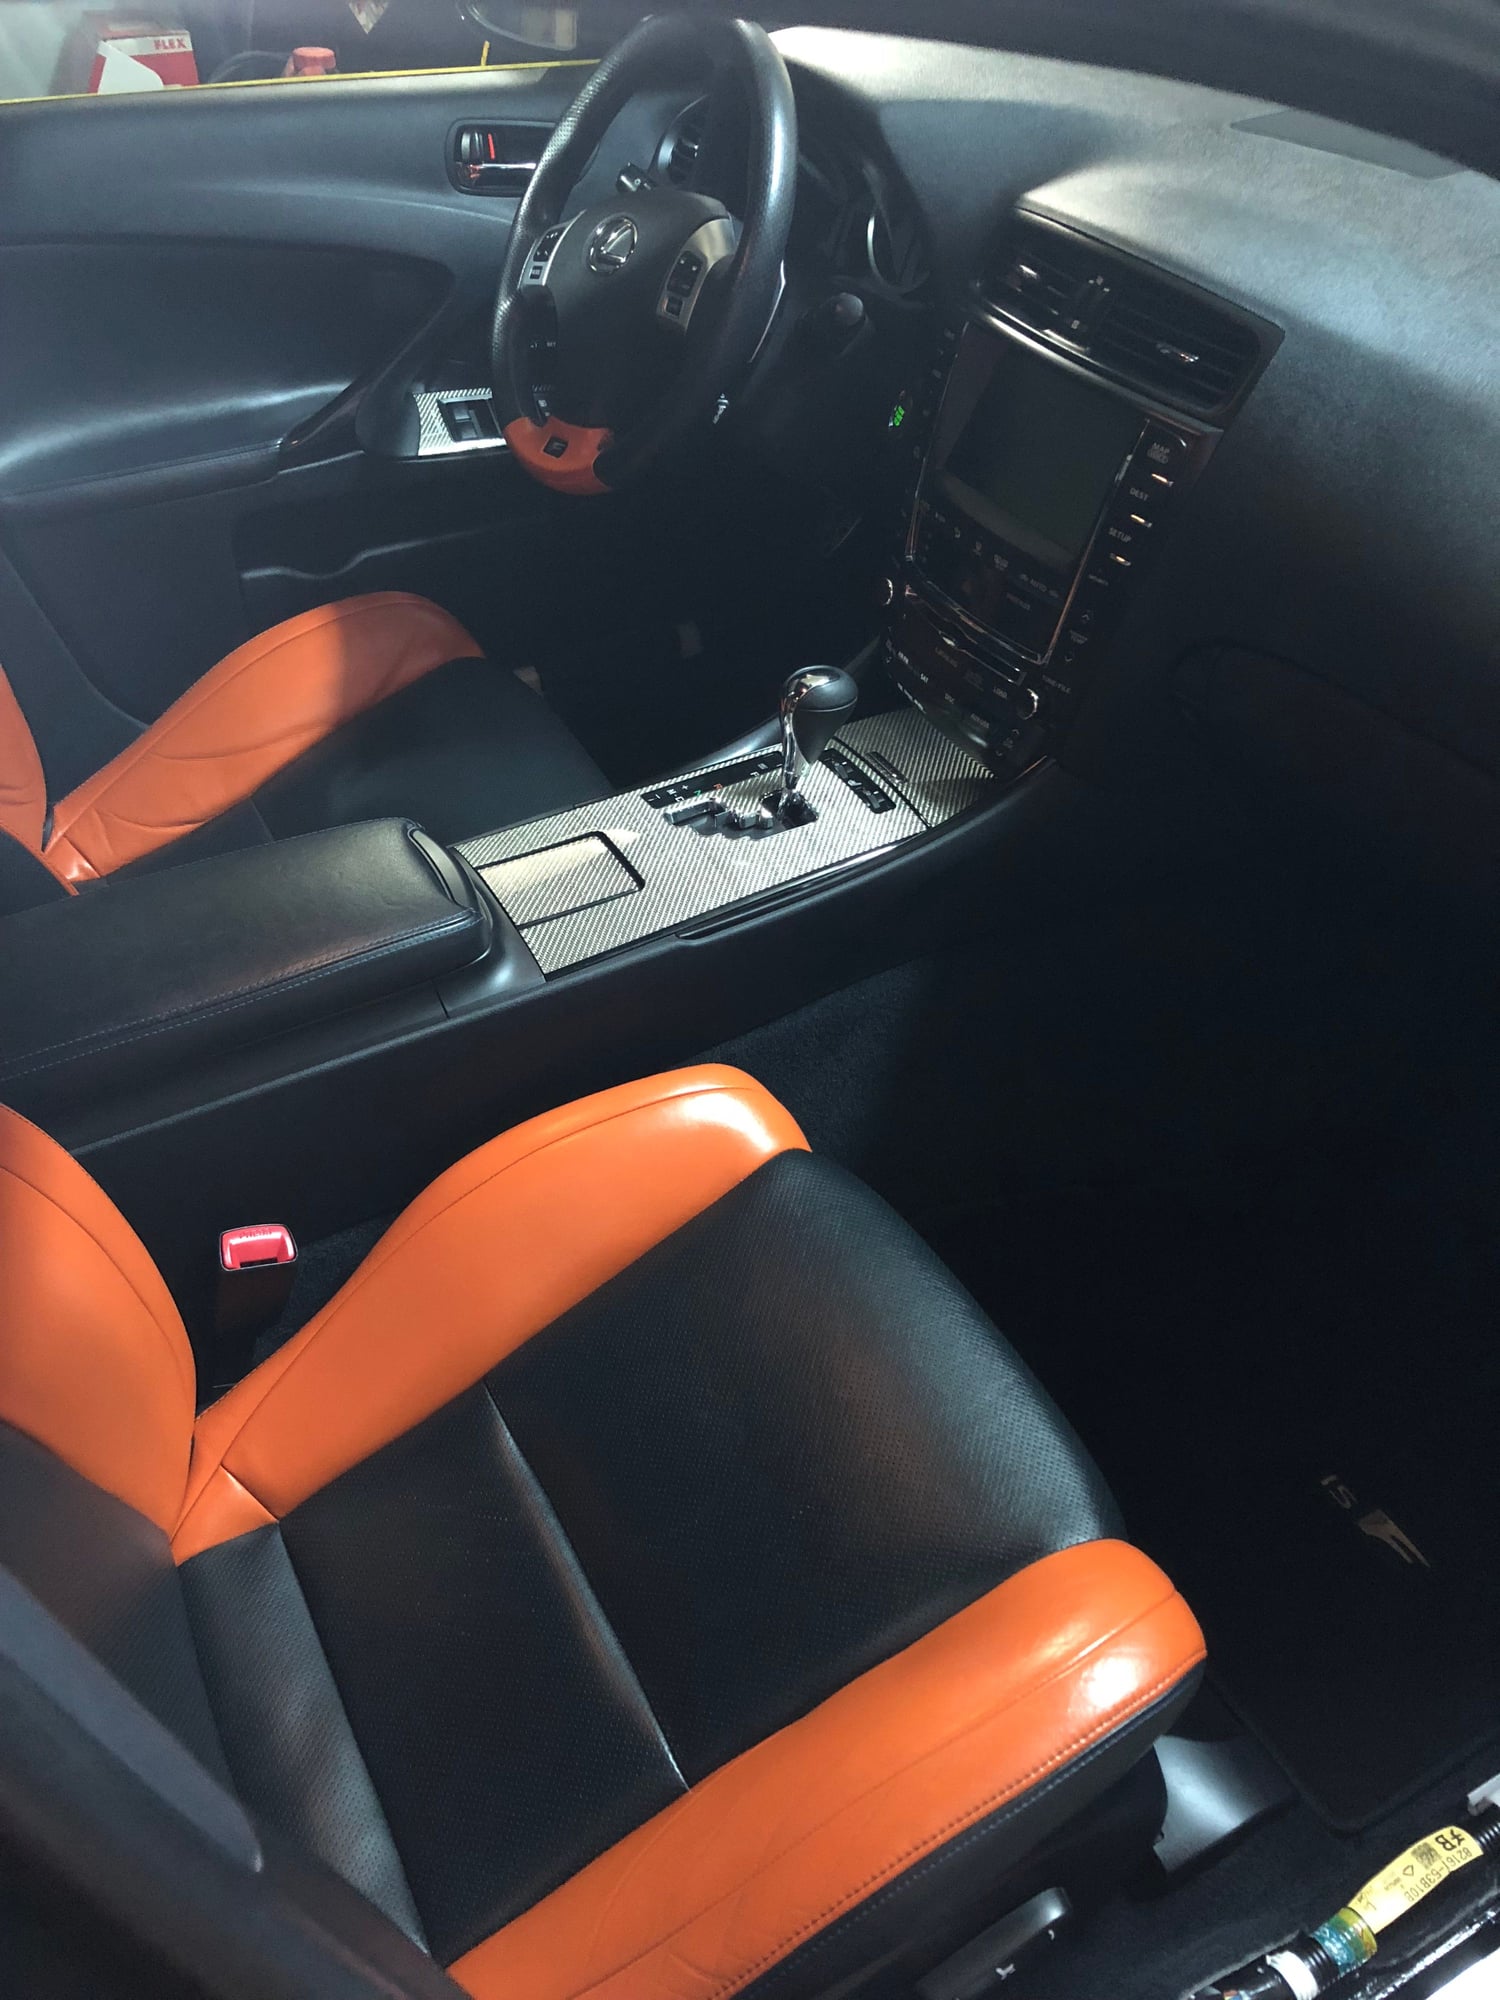 2011 Lexus IS F - 2011 ISF - Black with Black/Orange Interior - Used - VIN JTHBP5C23B5009519 - 65,859 Miles - 8 cyl - 2WD - Automatic - Sedan - Black - Morgantown, WV 26508, United States